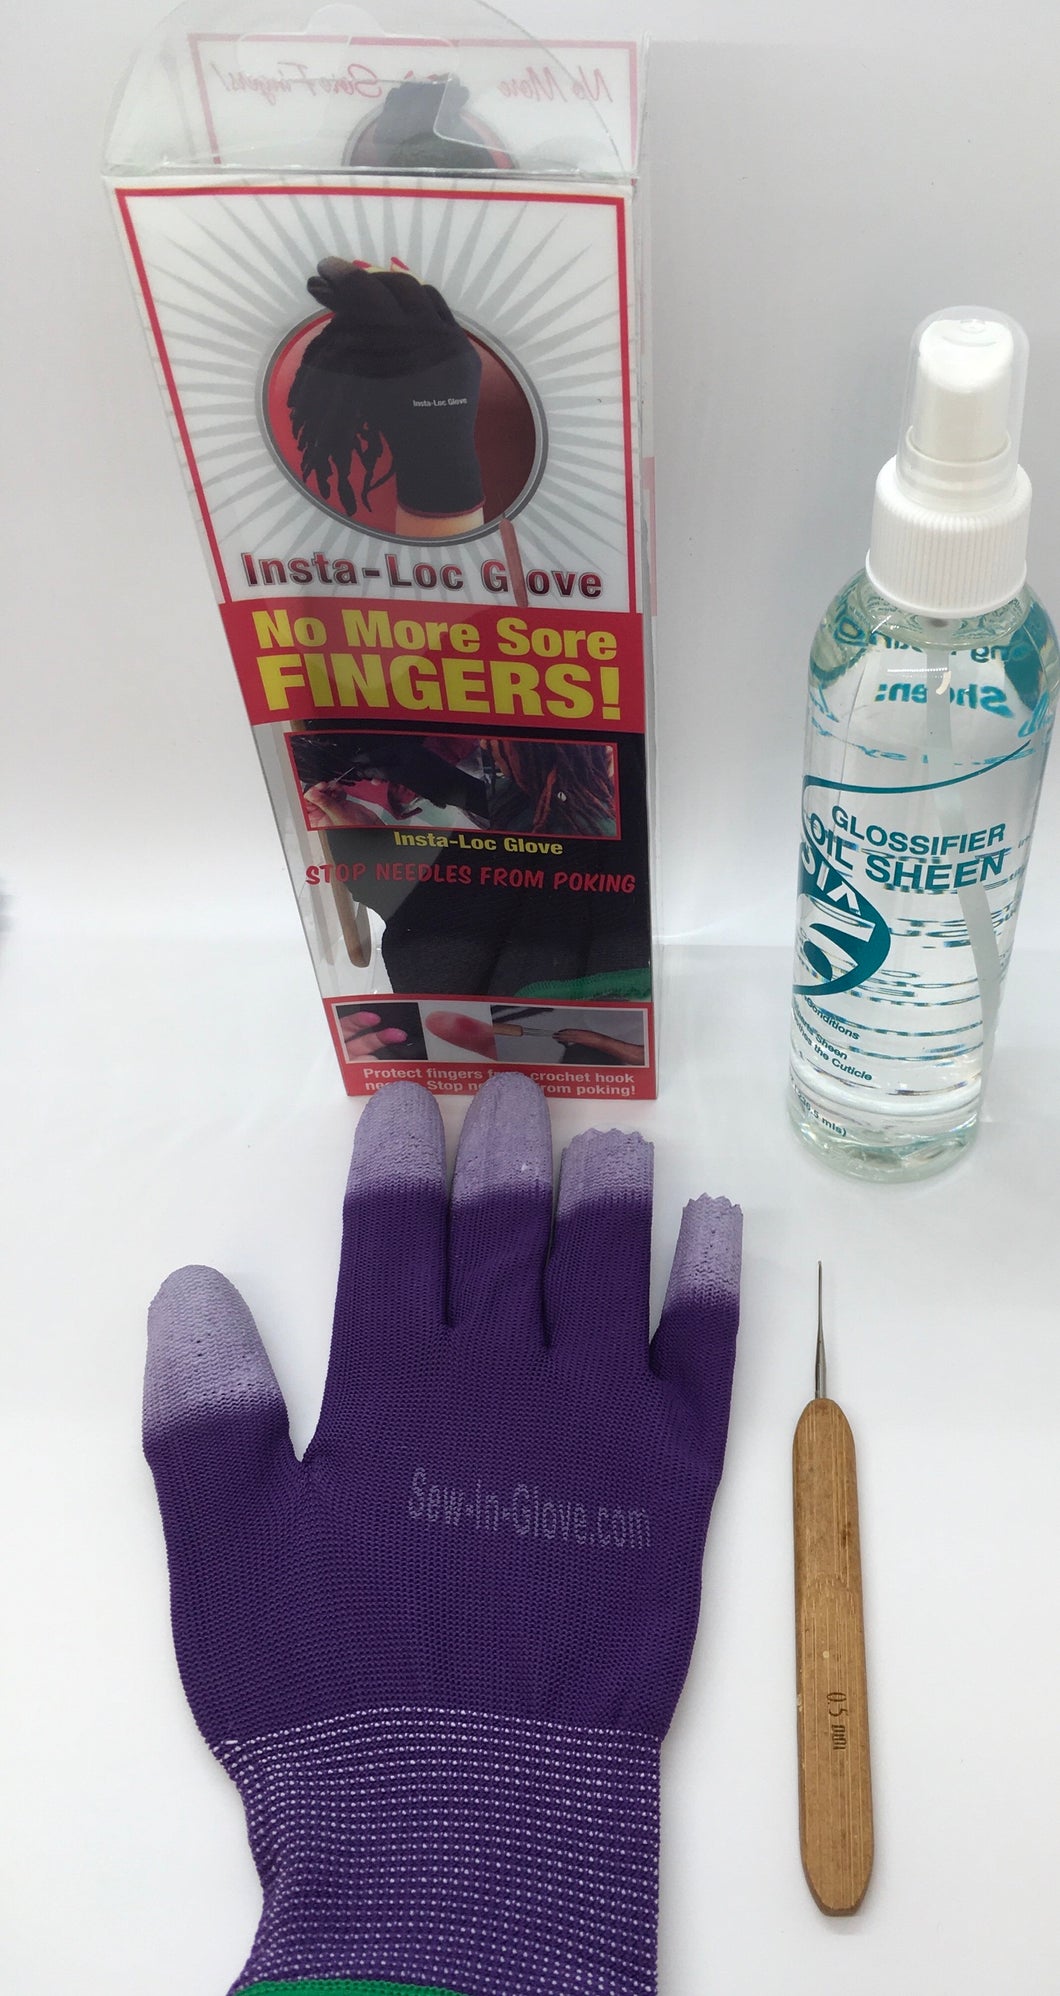 One Purple Insta-Loc Glove one 0.05 Crochet Hook Needle and One Moisturizing  Mist  Oil Sheen